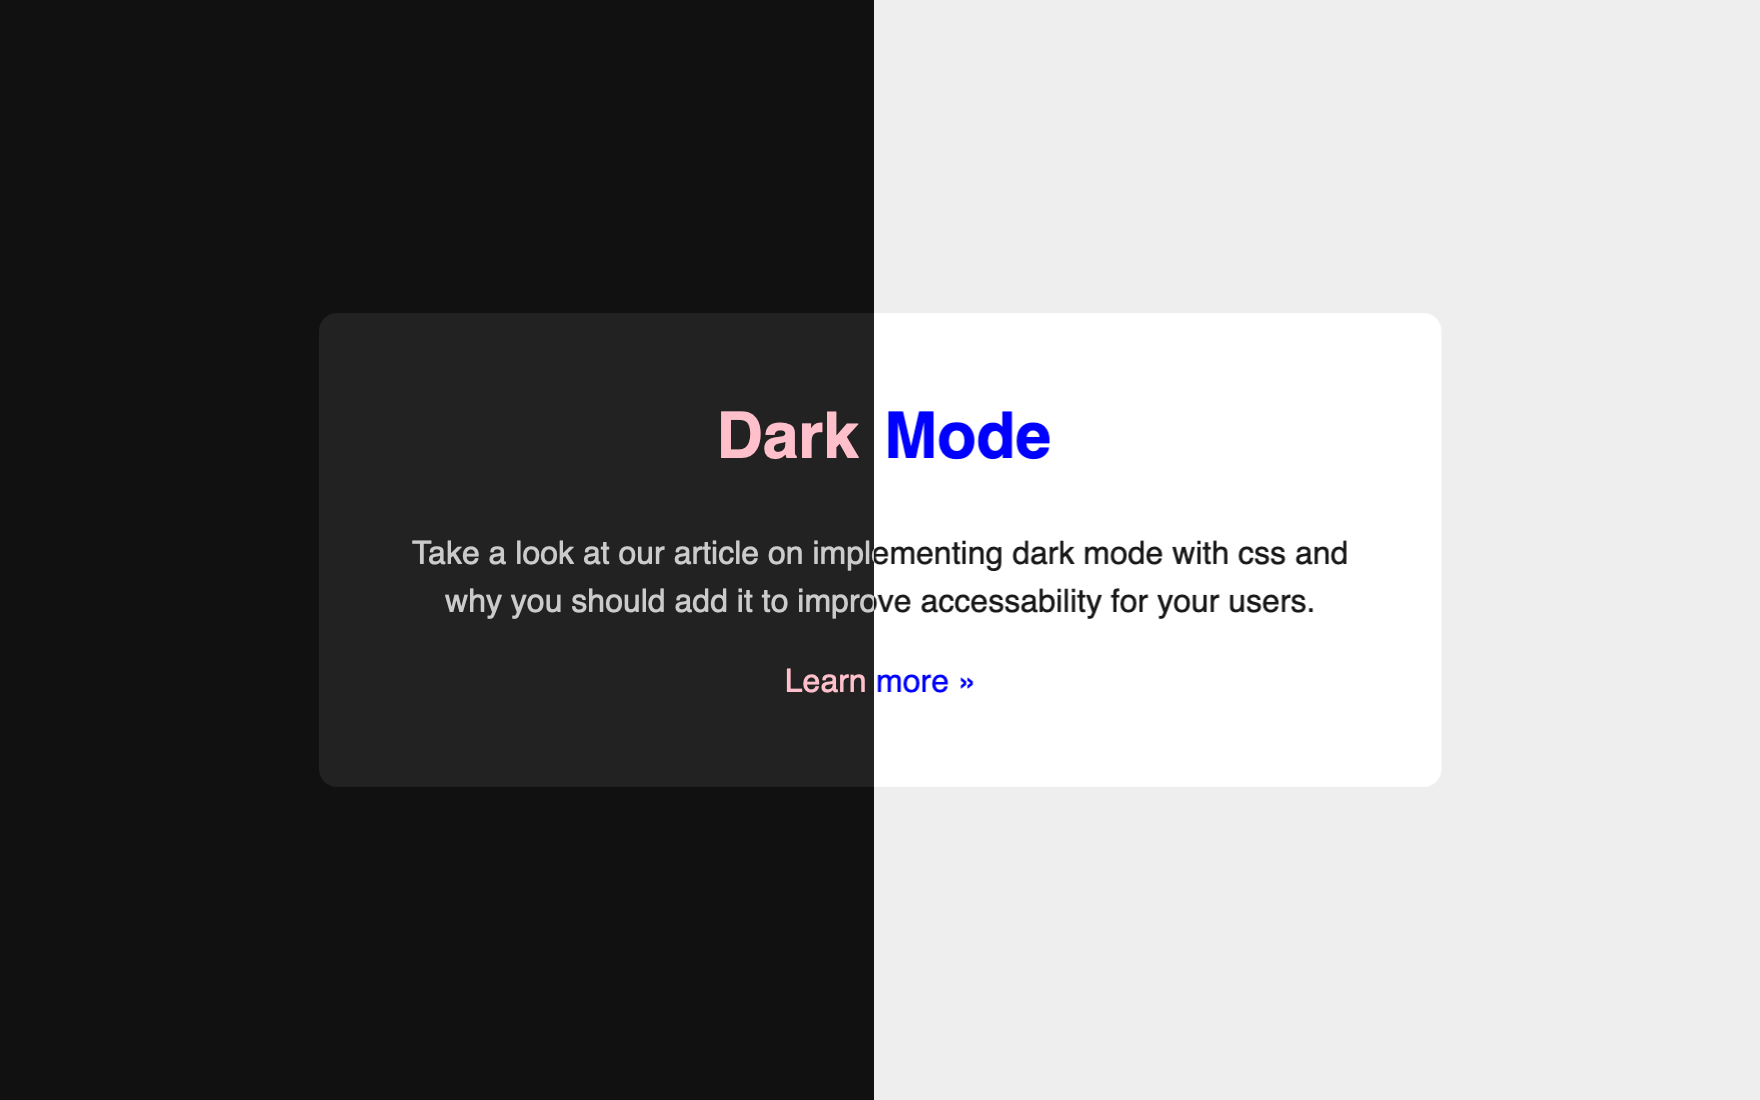 Dark mode UI trend